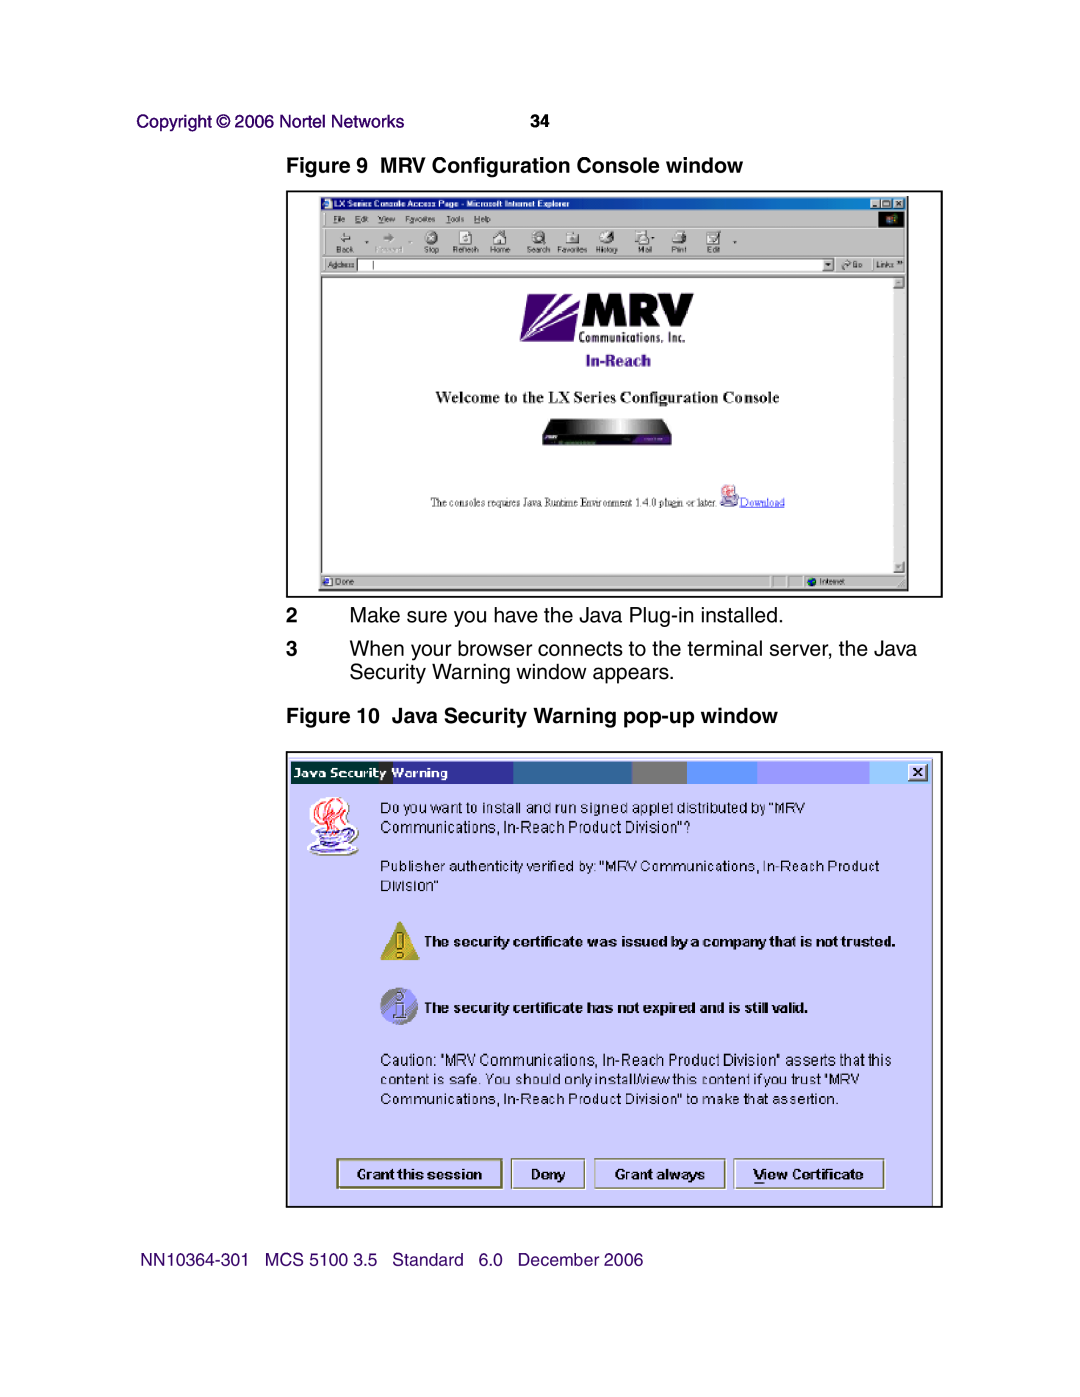 Nortel Networks V100 MRV Configuration Console window, Java Security Warning pop-up window, Copyright 2006 Nortel Networks 